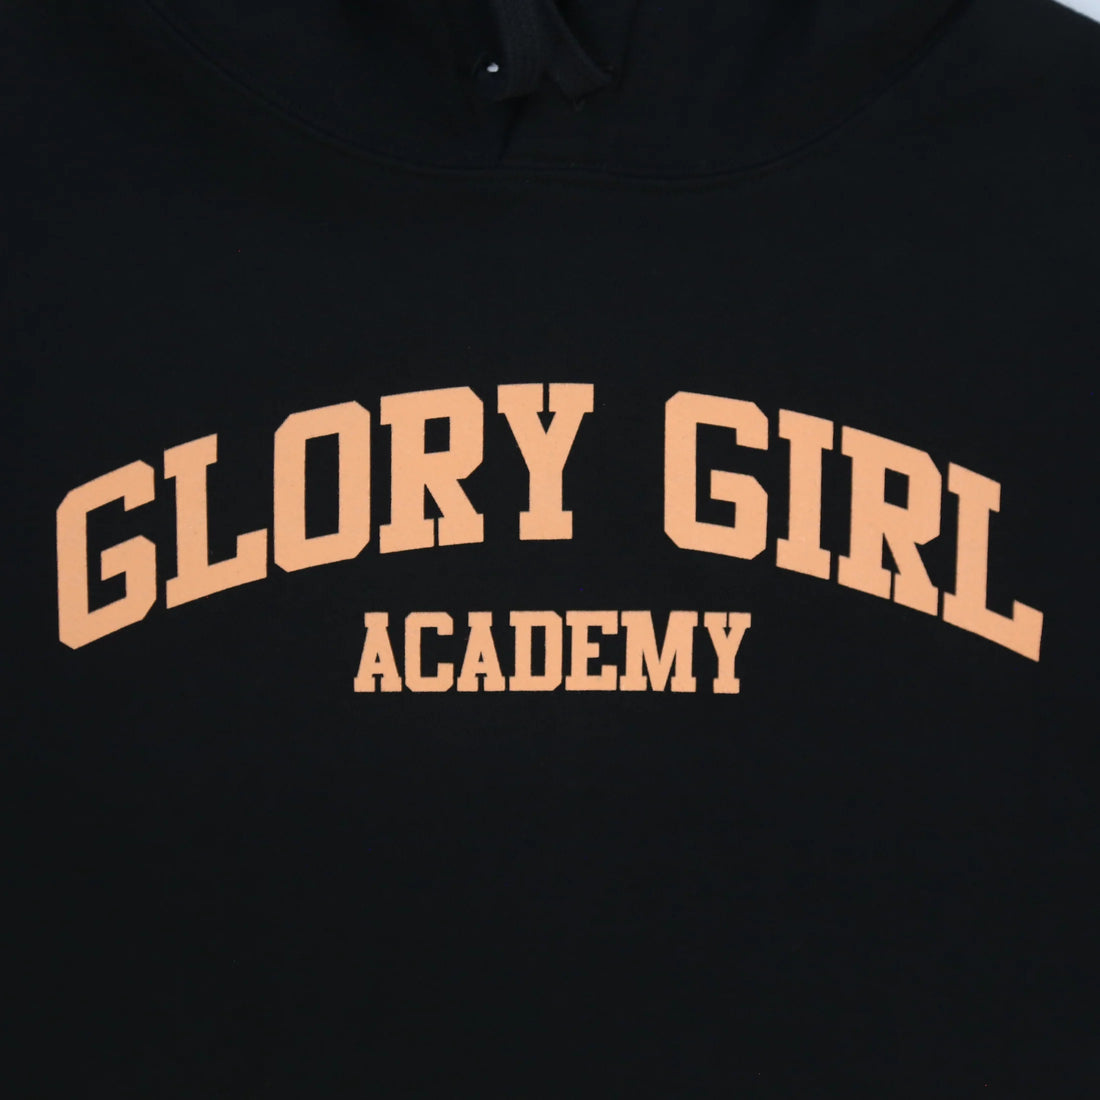 GLO GANG Glory Girl Academy Crop Hoodie (Black)